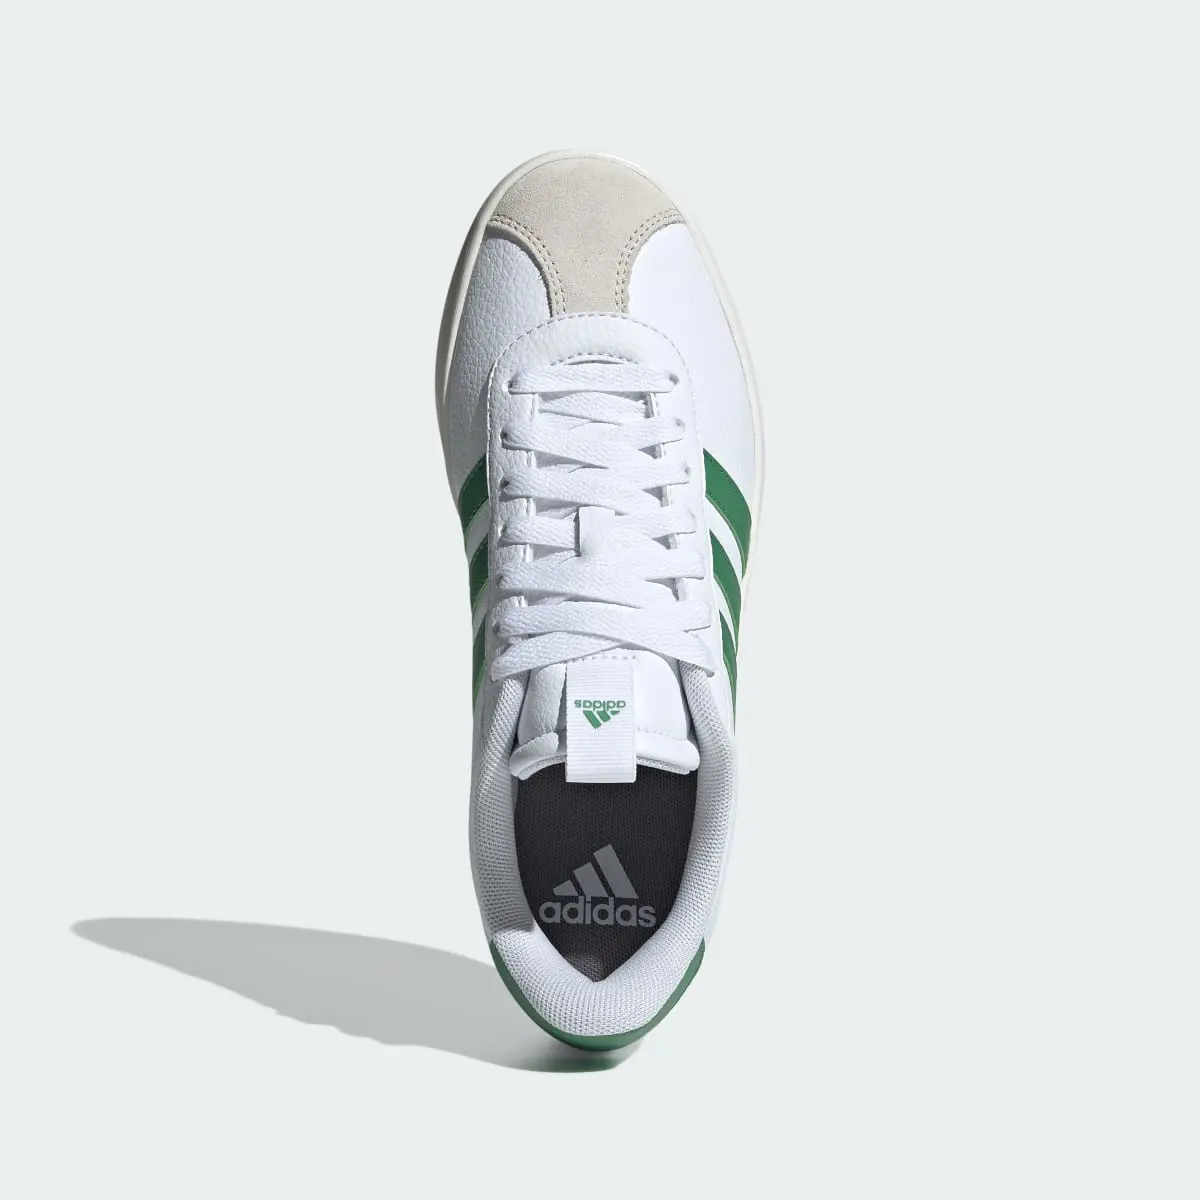 Adidas VL Court 3.0 Low Shoes. 3